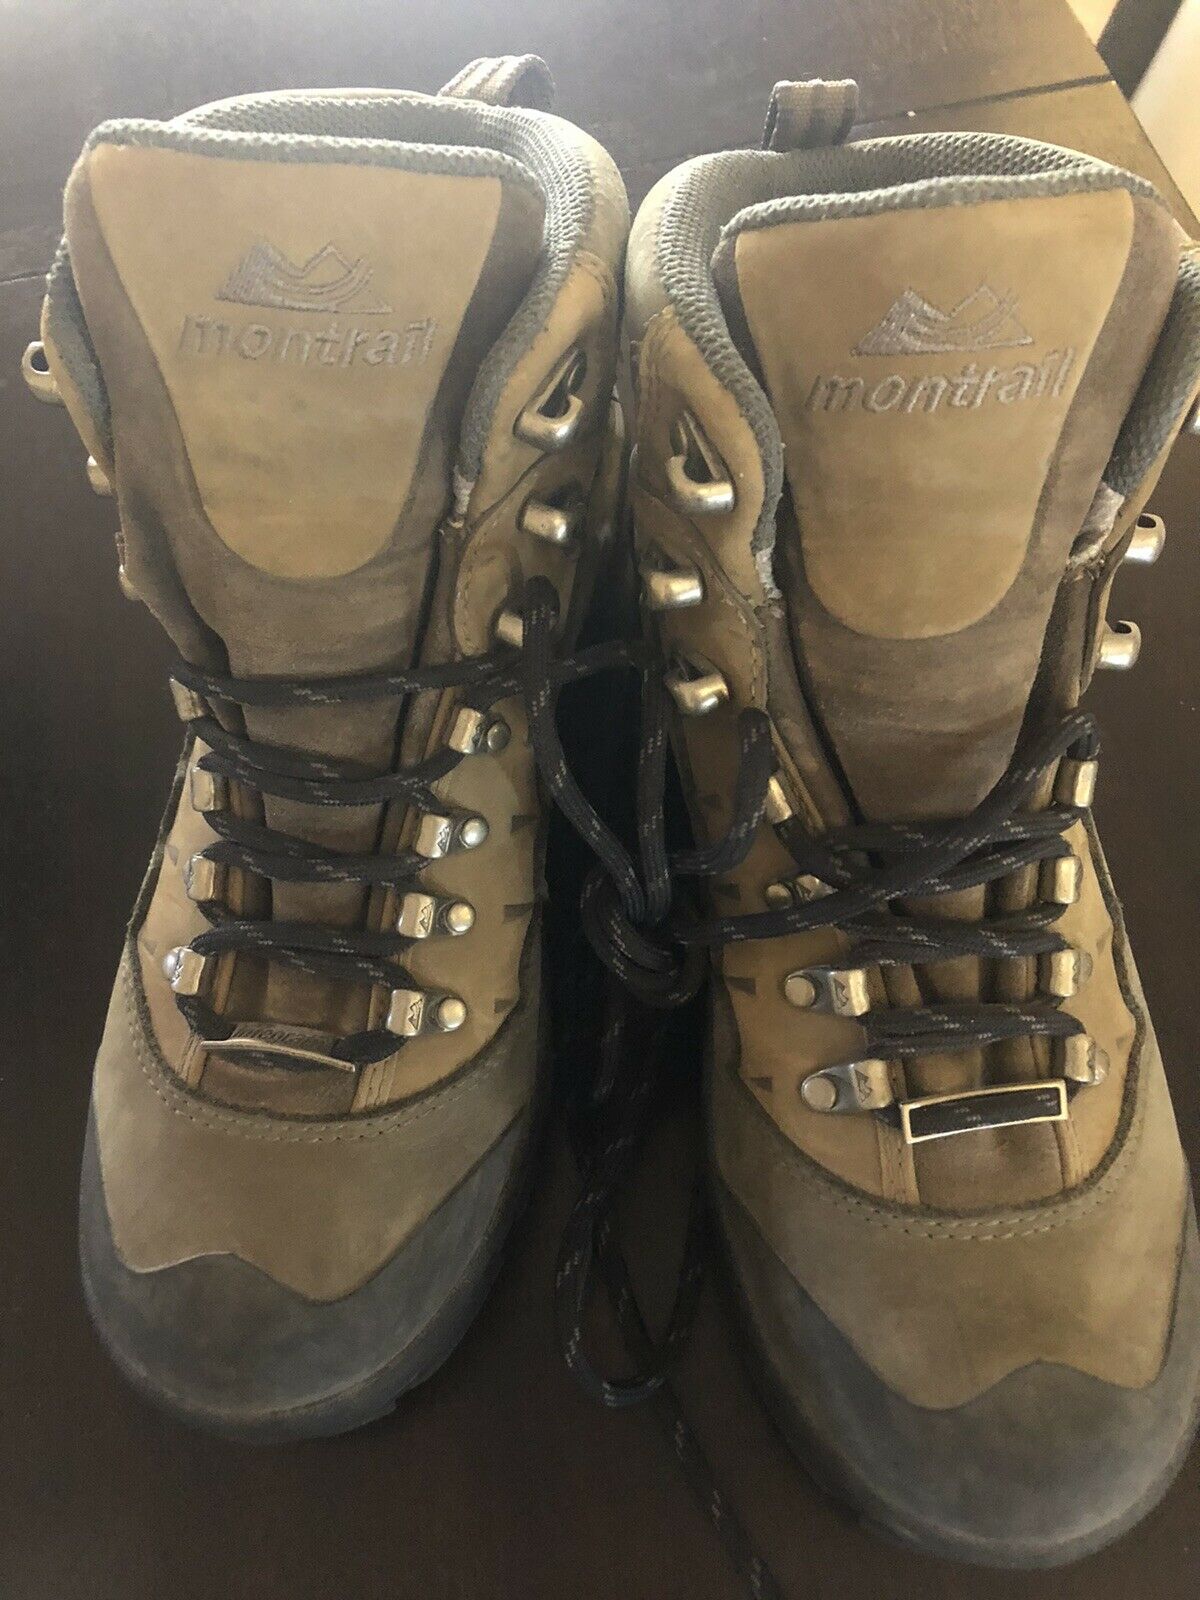 Montrail Gortex Hiking Brown Boots Women's Size 7